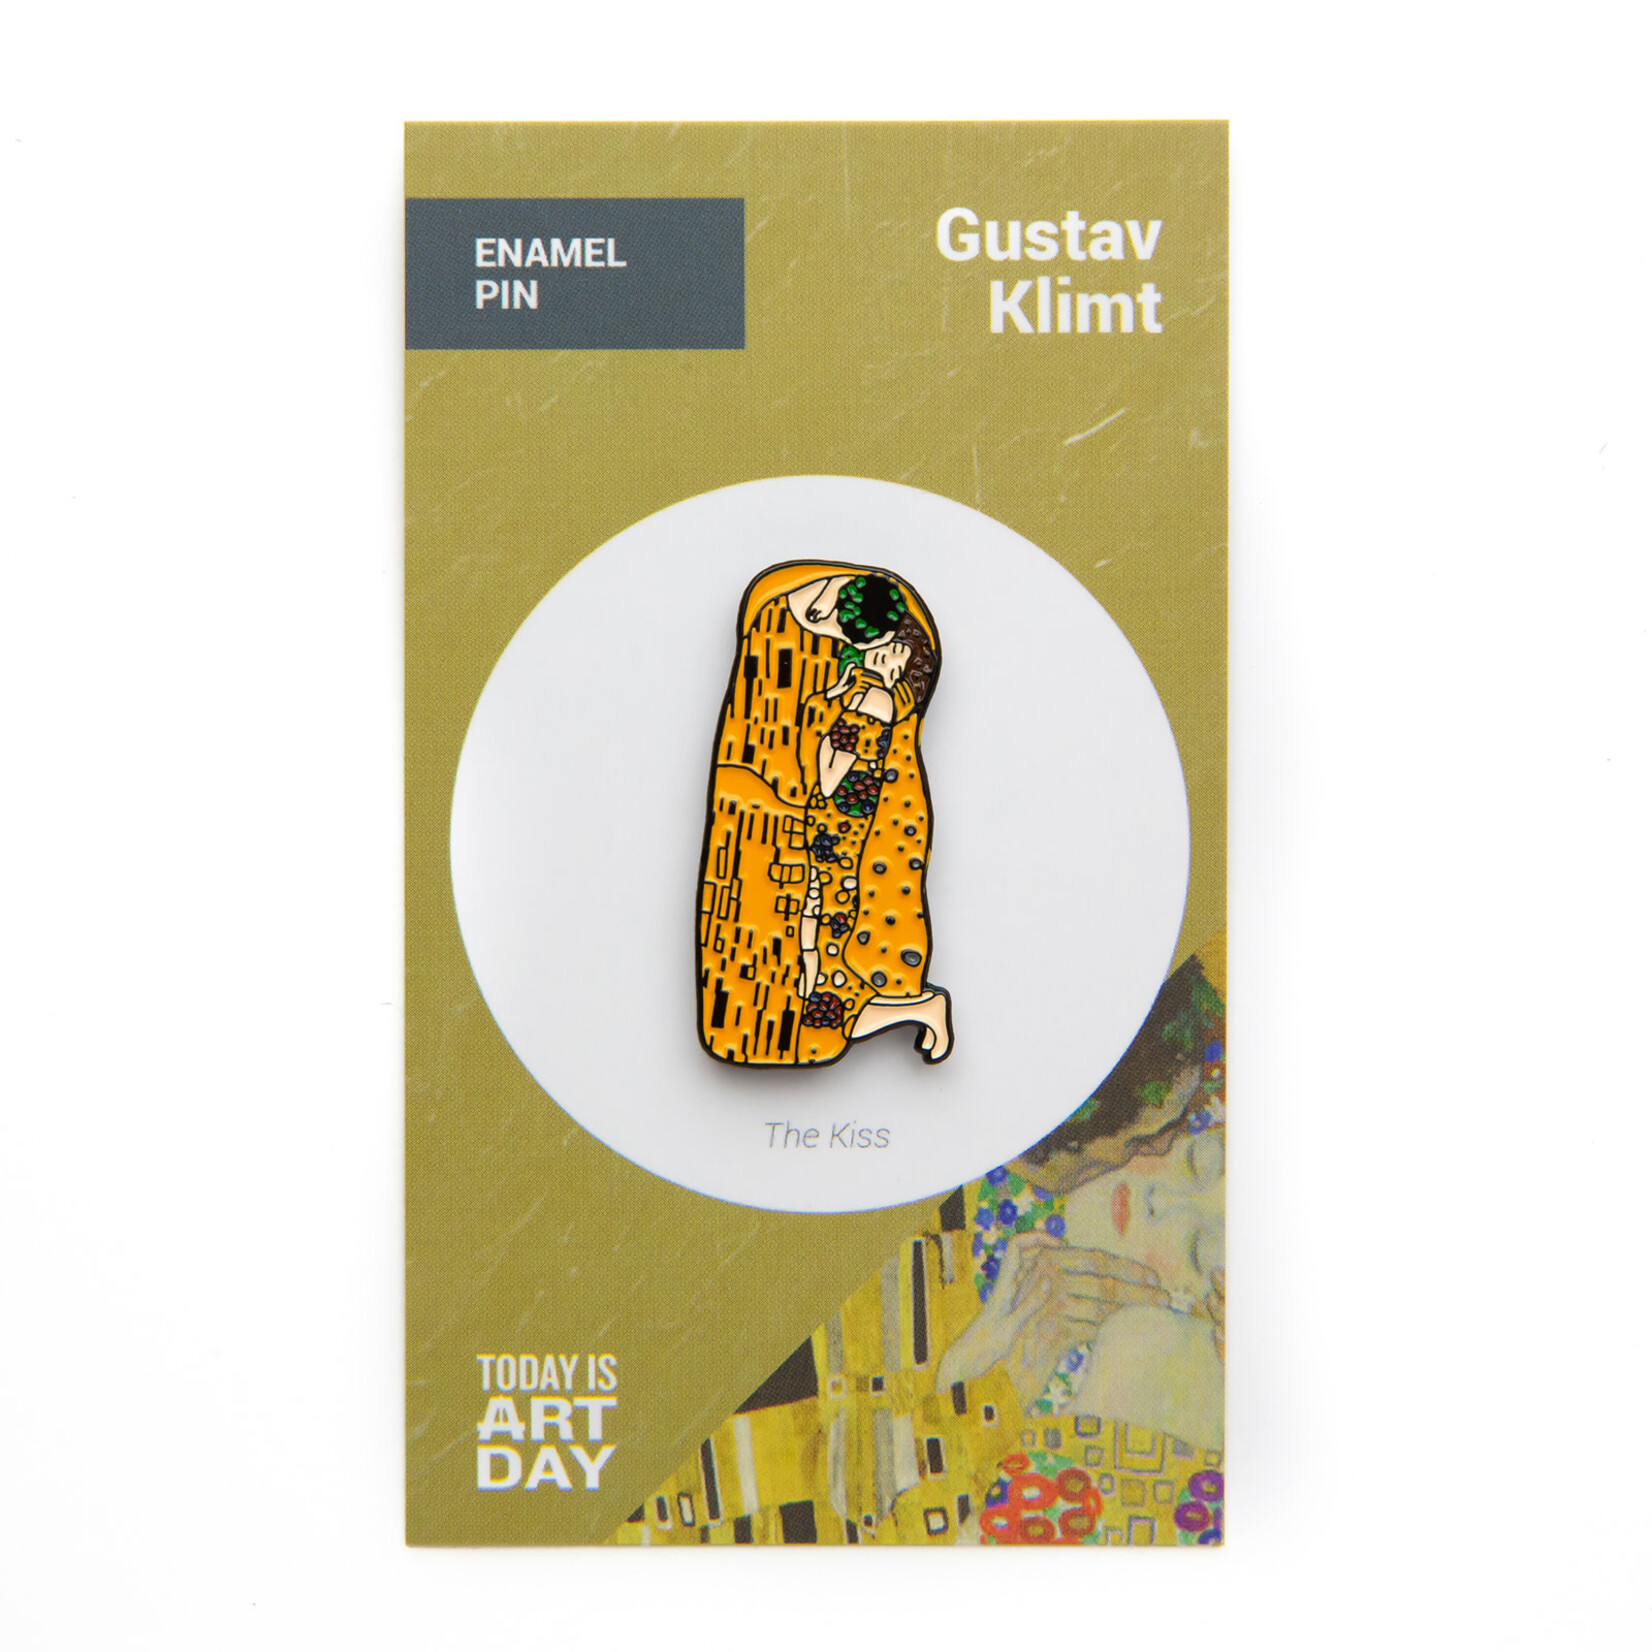 Today is Art Day Art History Enamel Pins, Kiss - Klimt